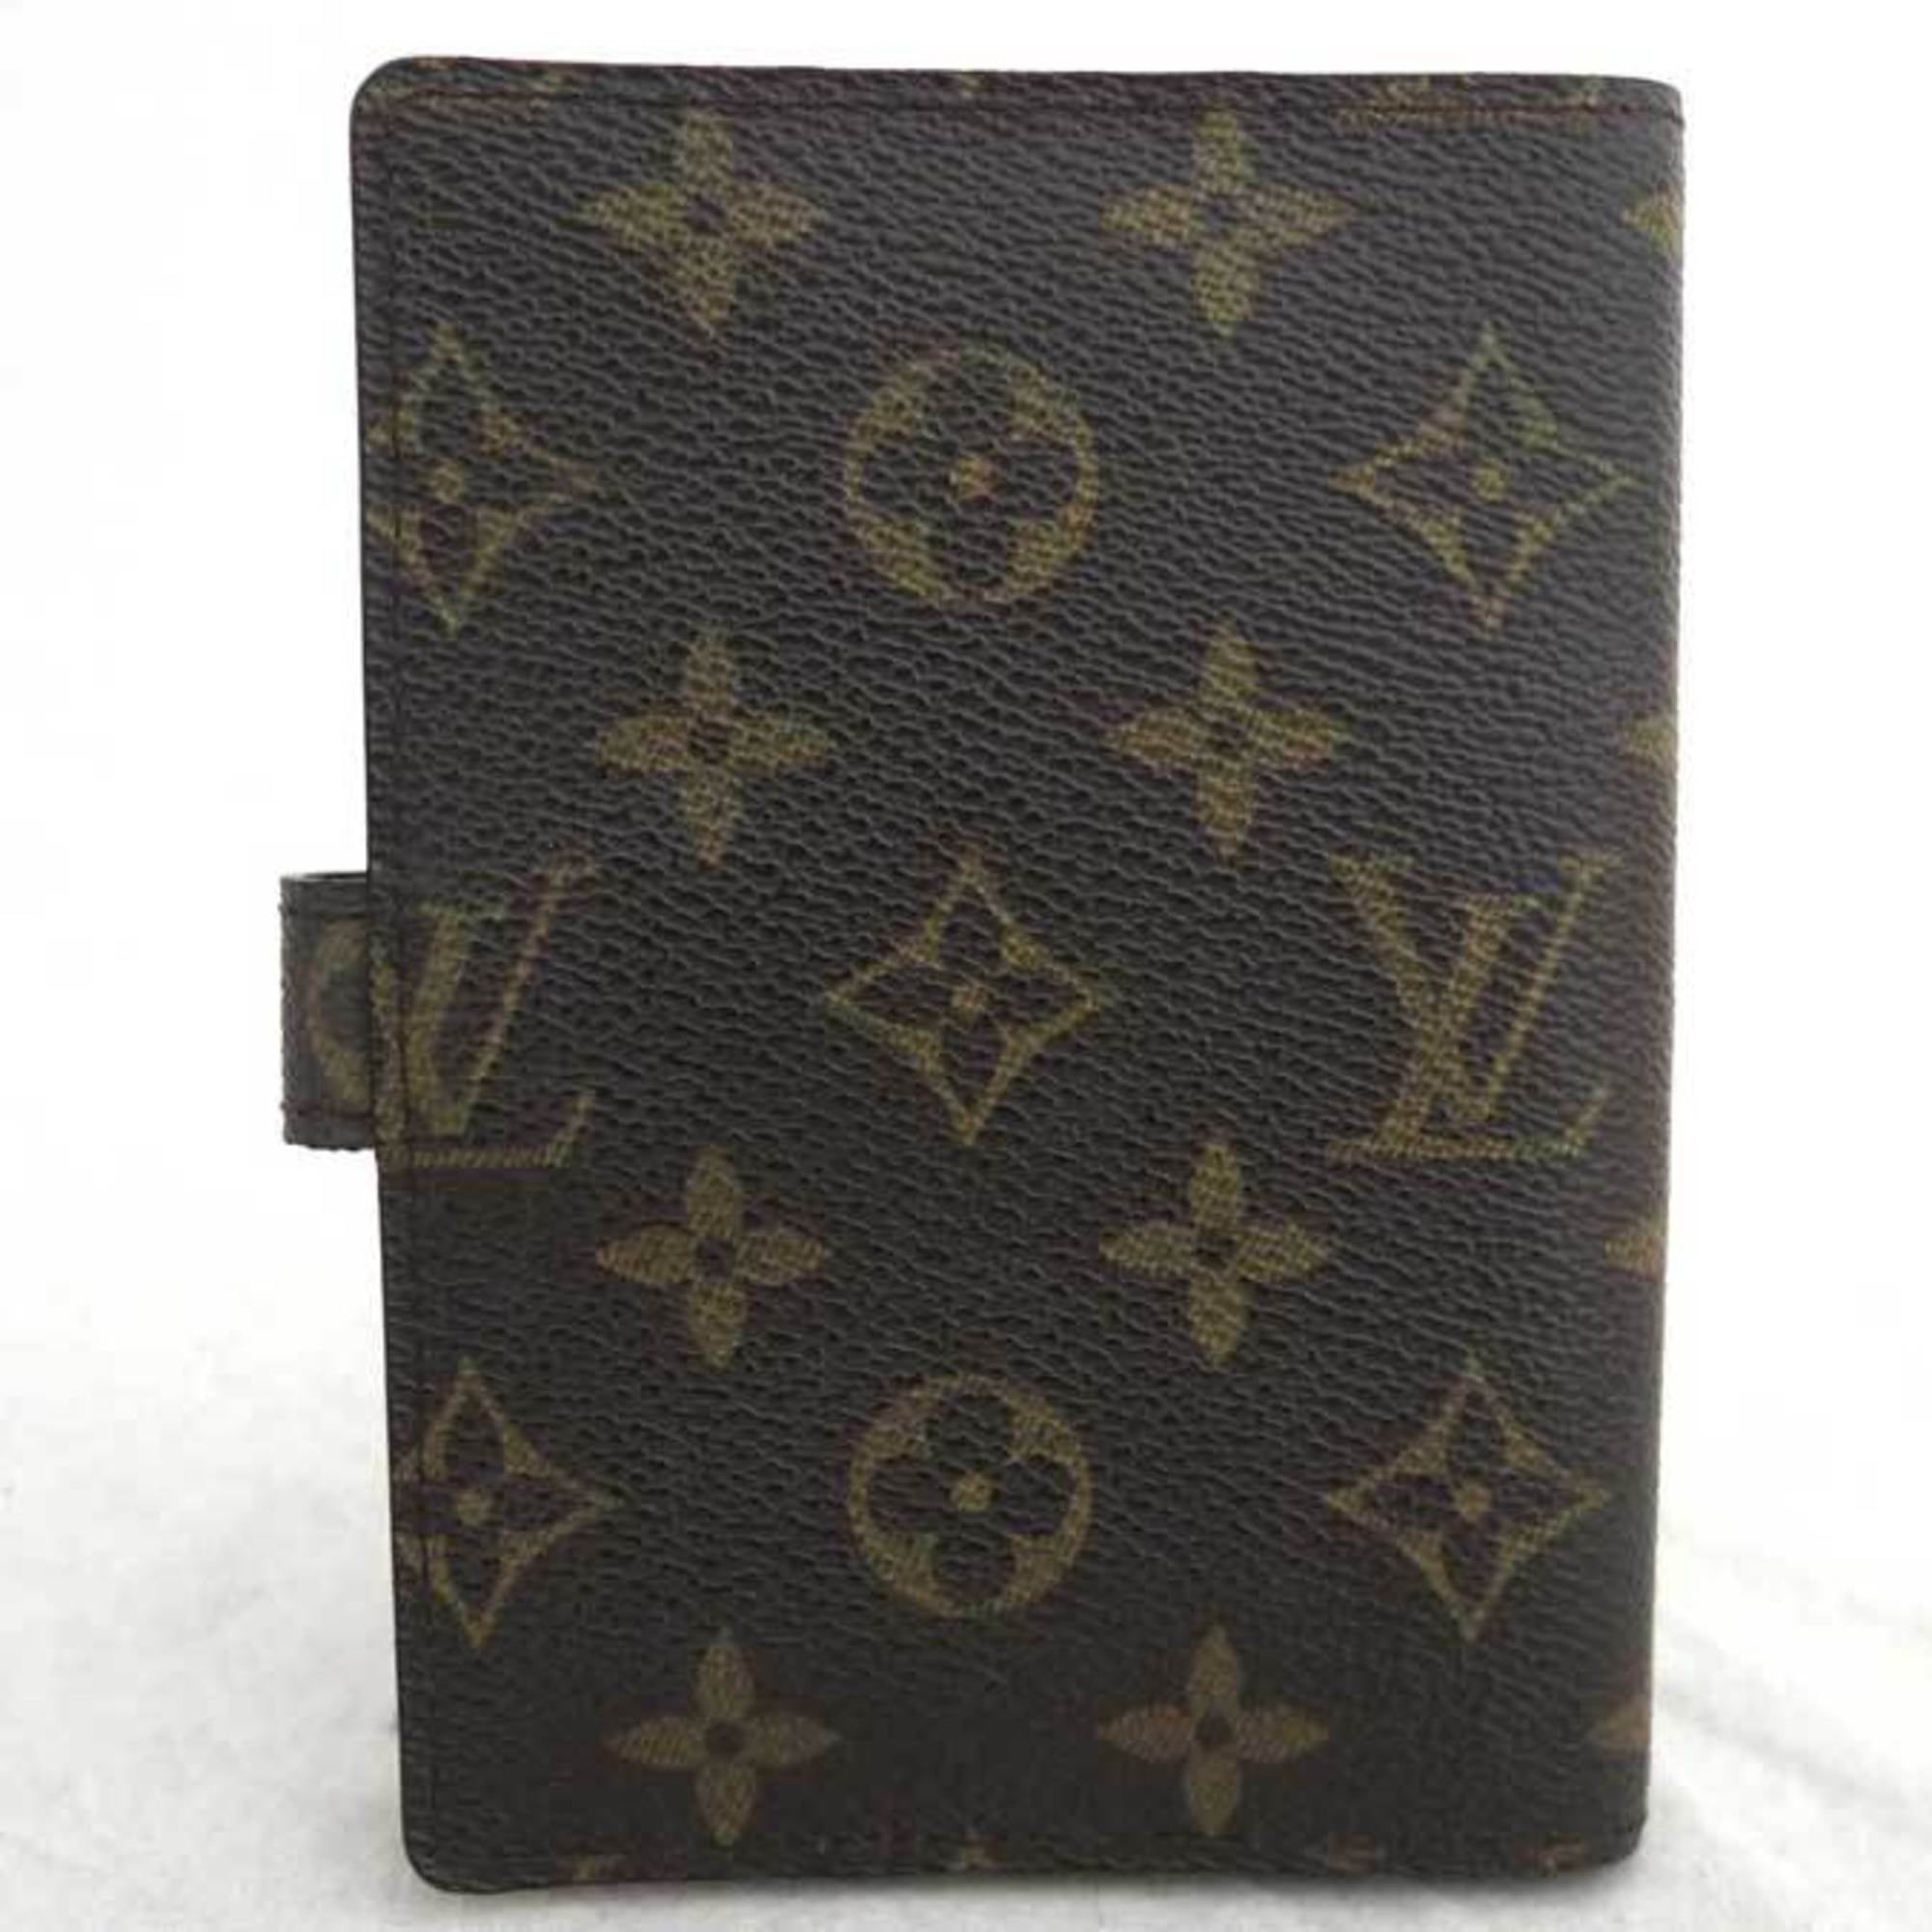 Louis Vuitton Passport Cover Review